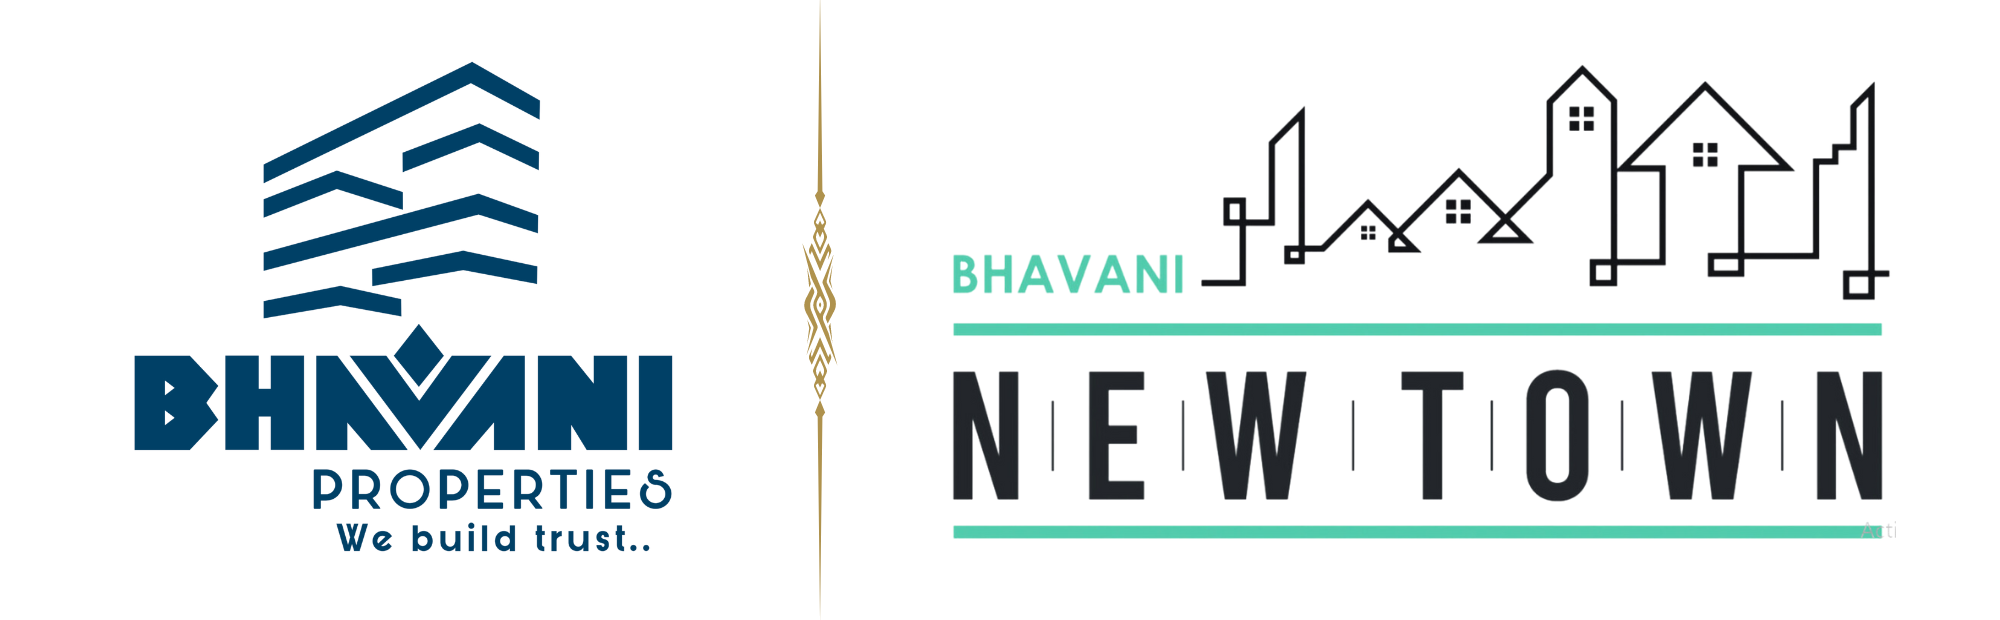 bhavani properties and bhavani new town logo